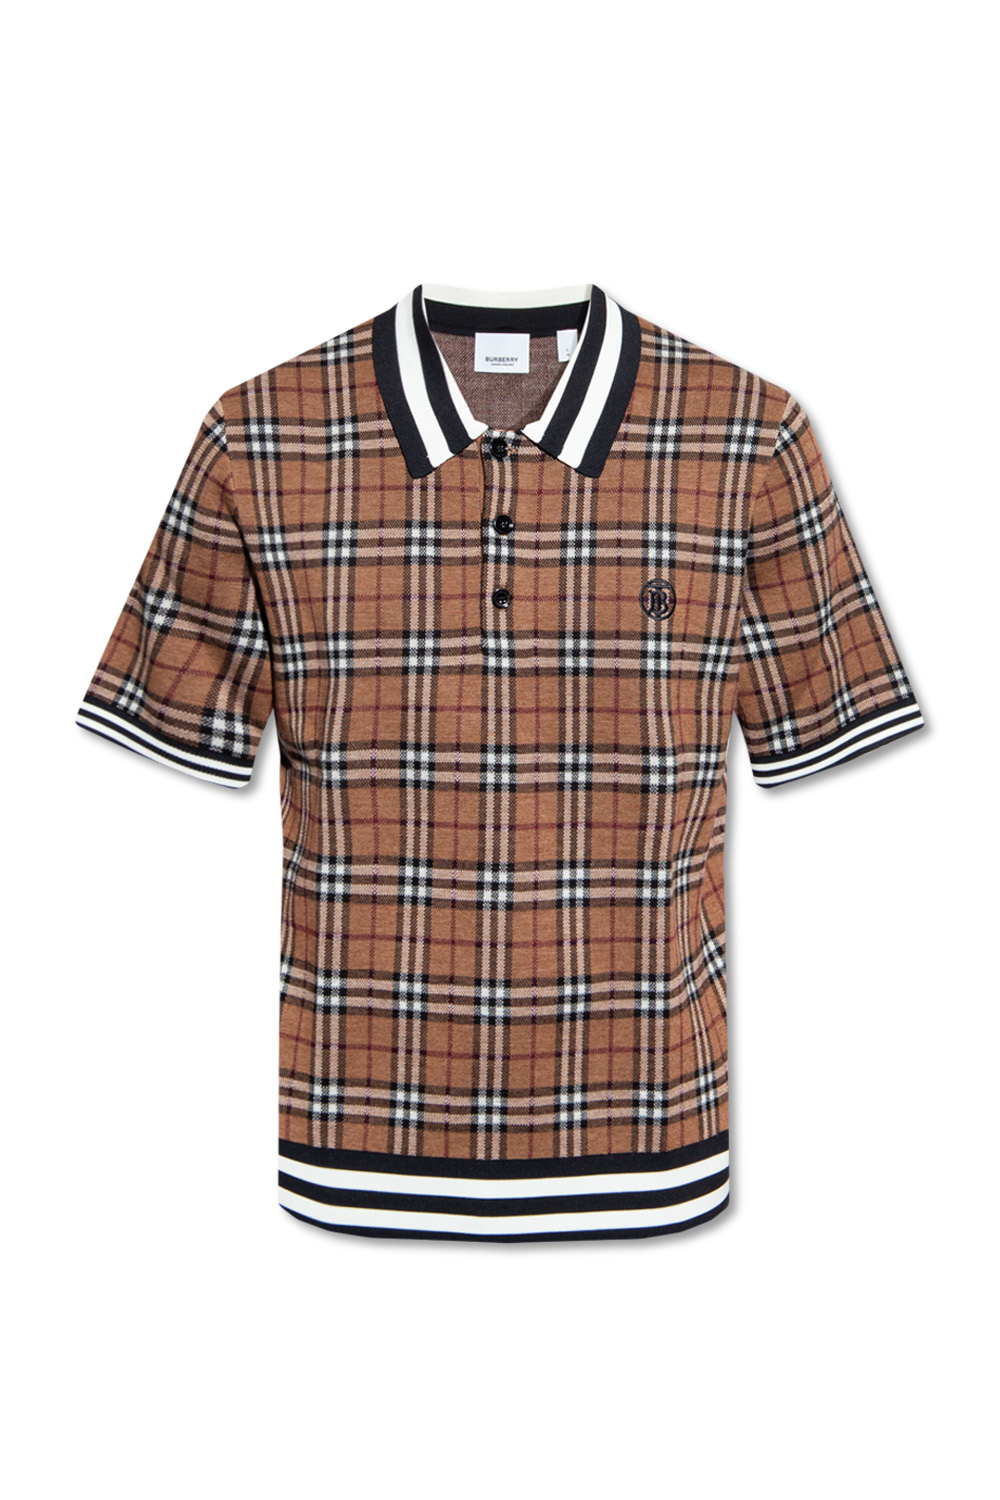 Burberry ‘Makeham’ wool Camisa polo shirt